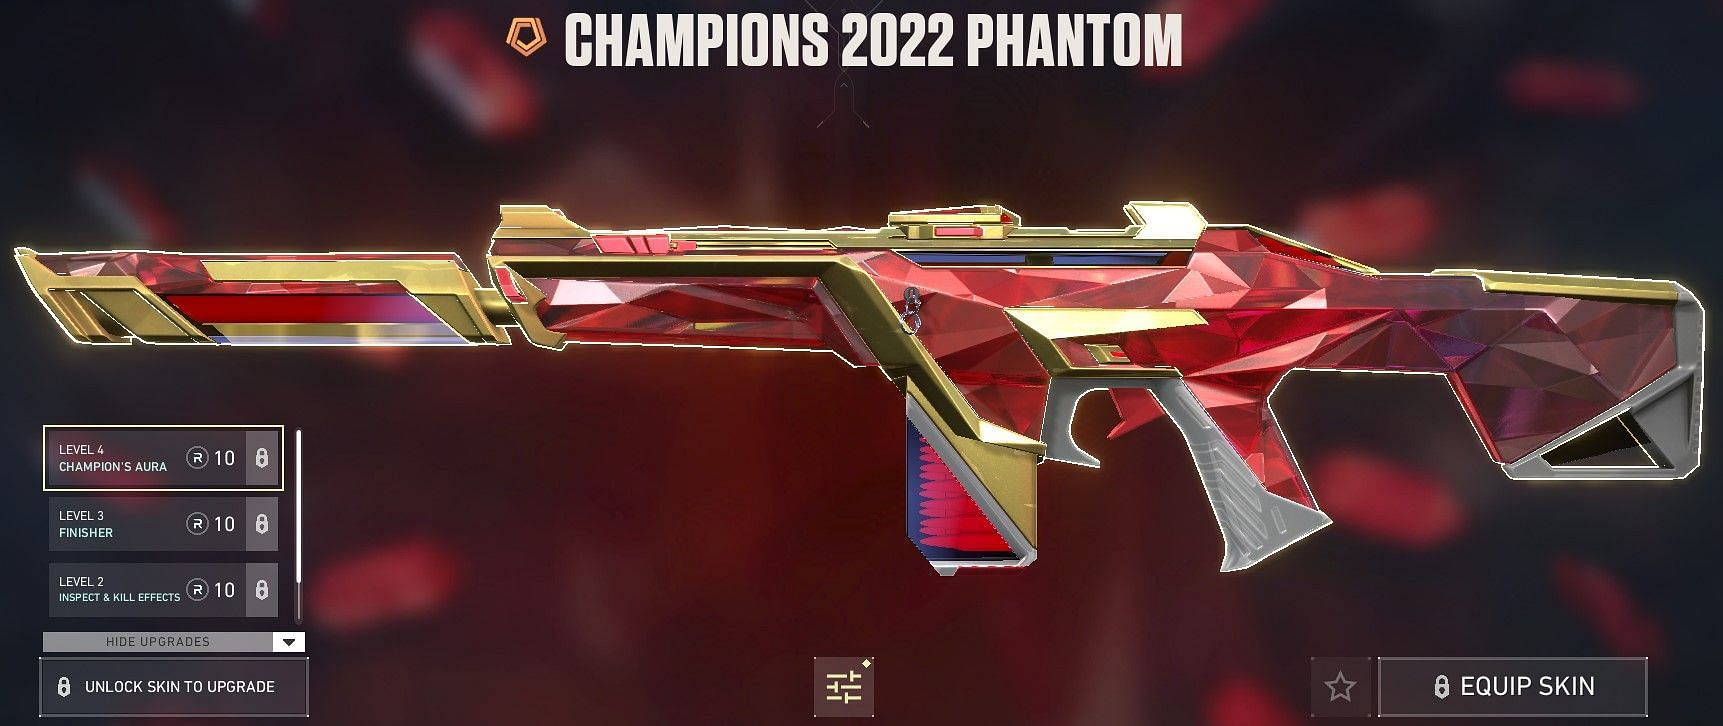 Champions 2022 Phantom (Image via Riot Games)